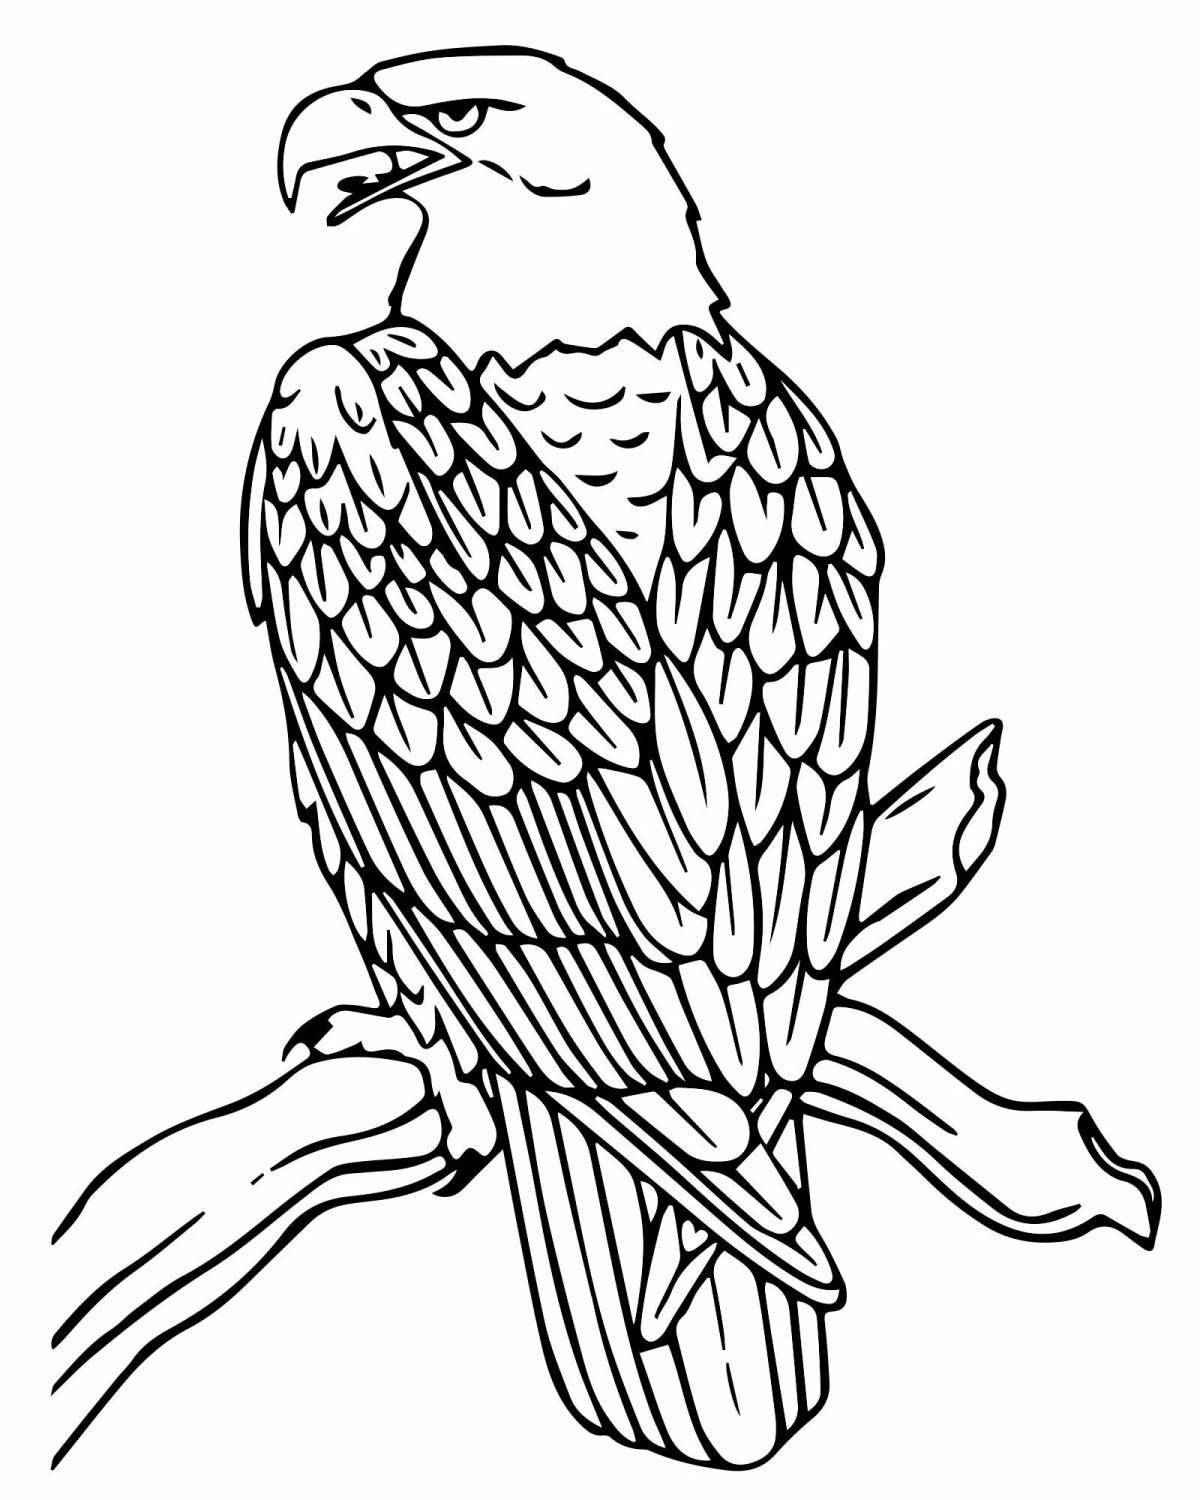 Coloring book bold eagle